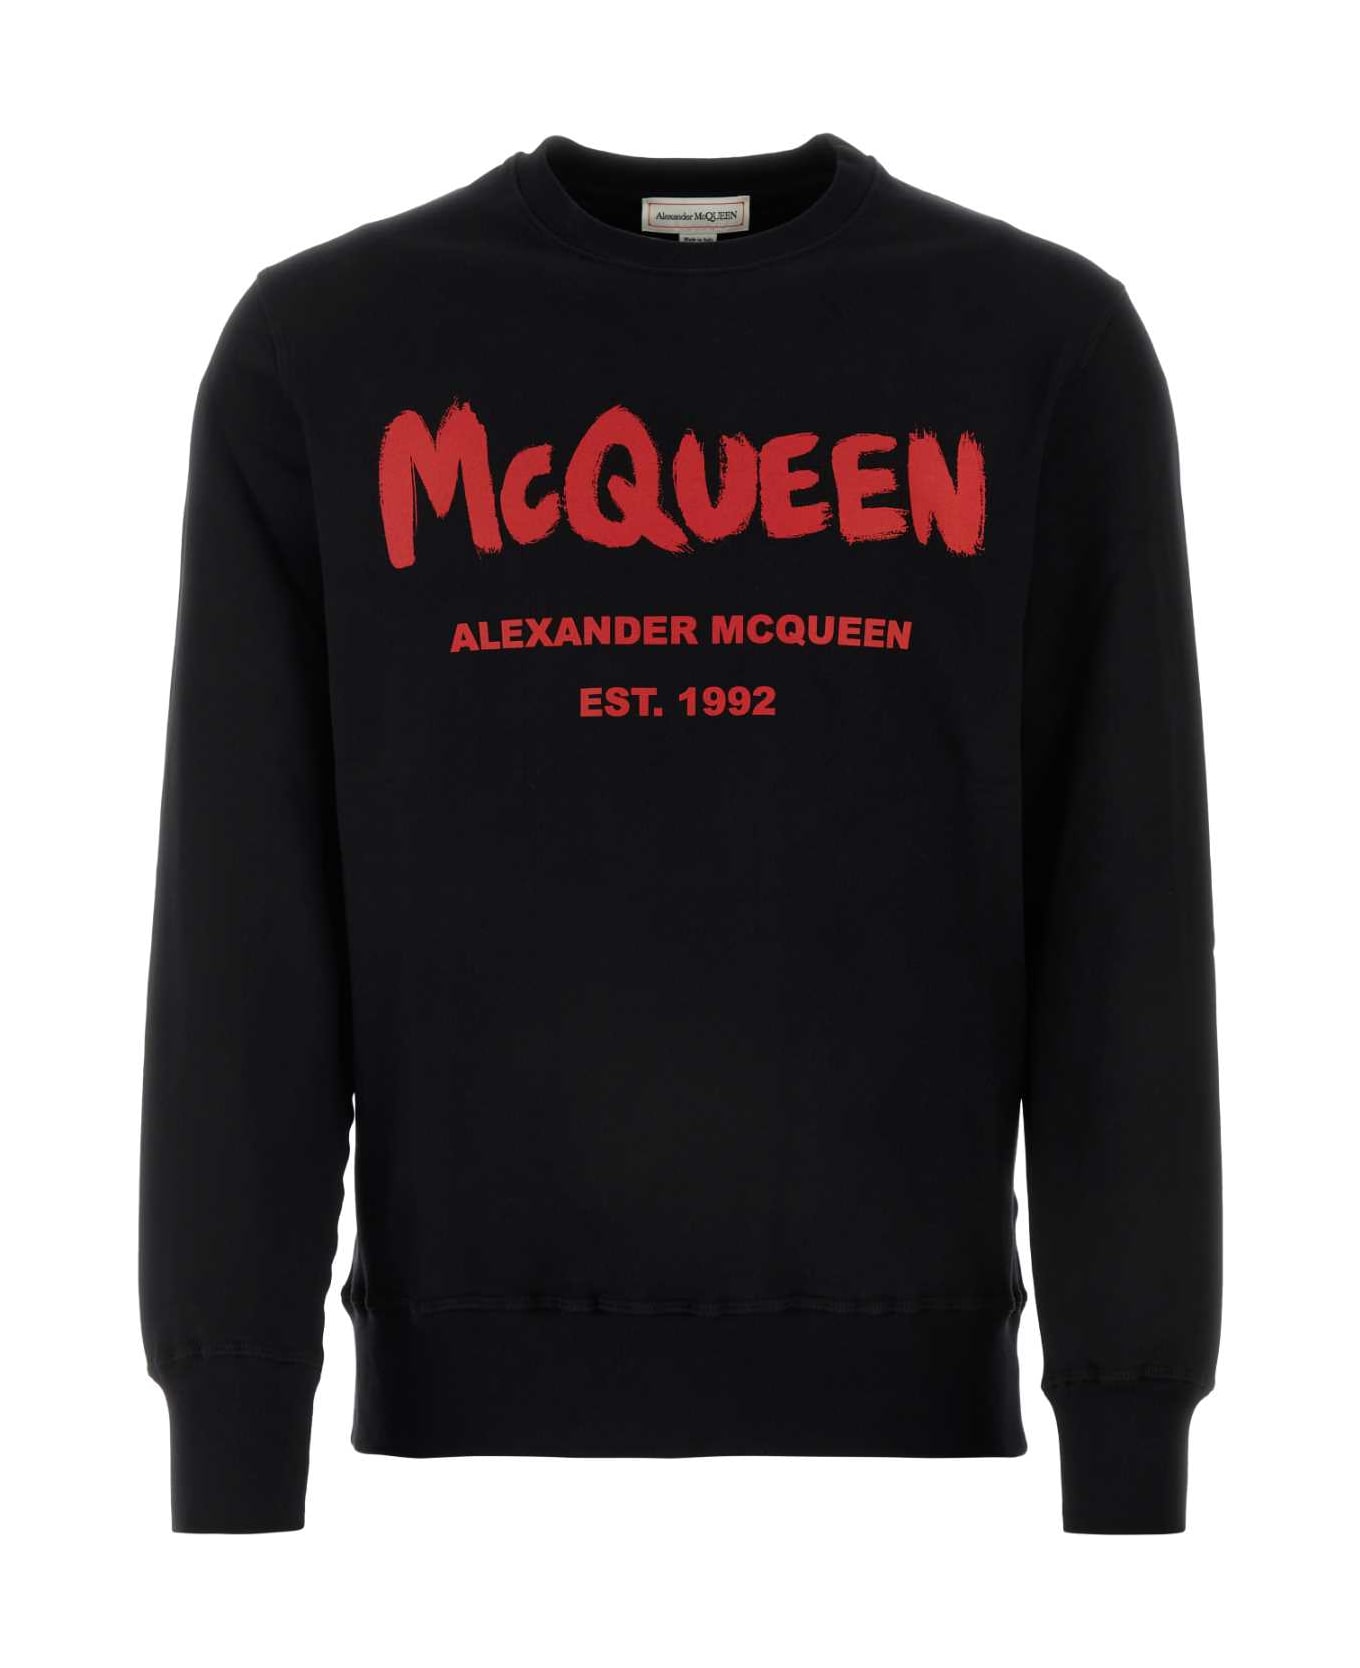 Alexander McQueen Black Cotton Sweatshirt - BLACKLUSTRED